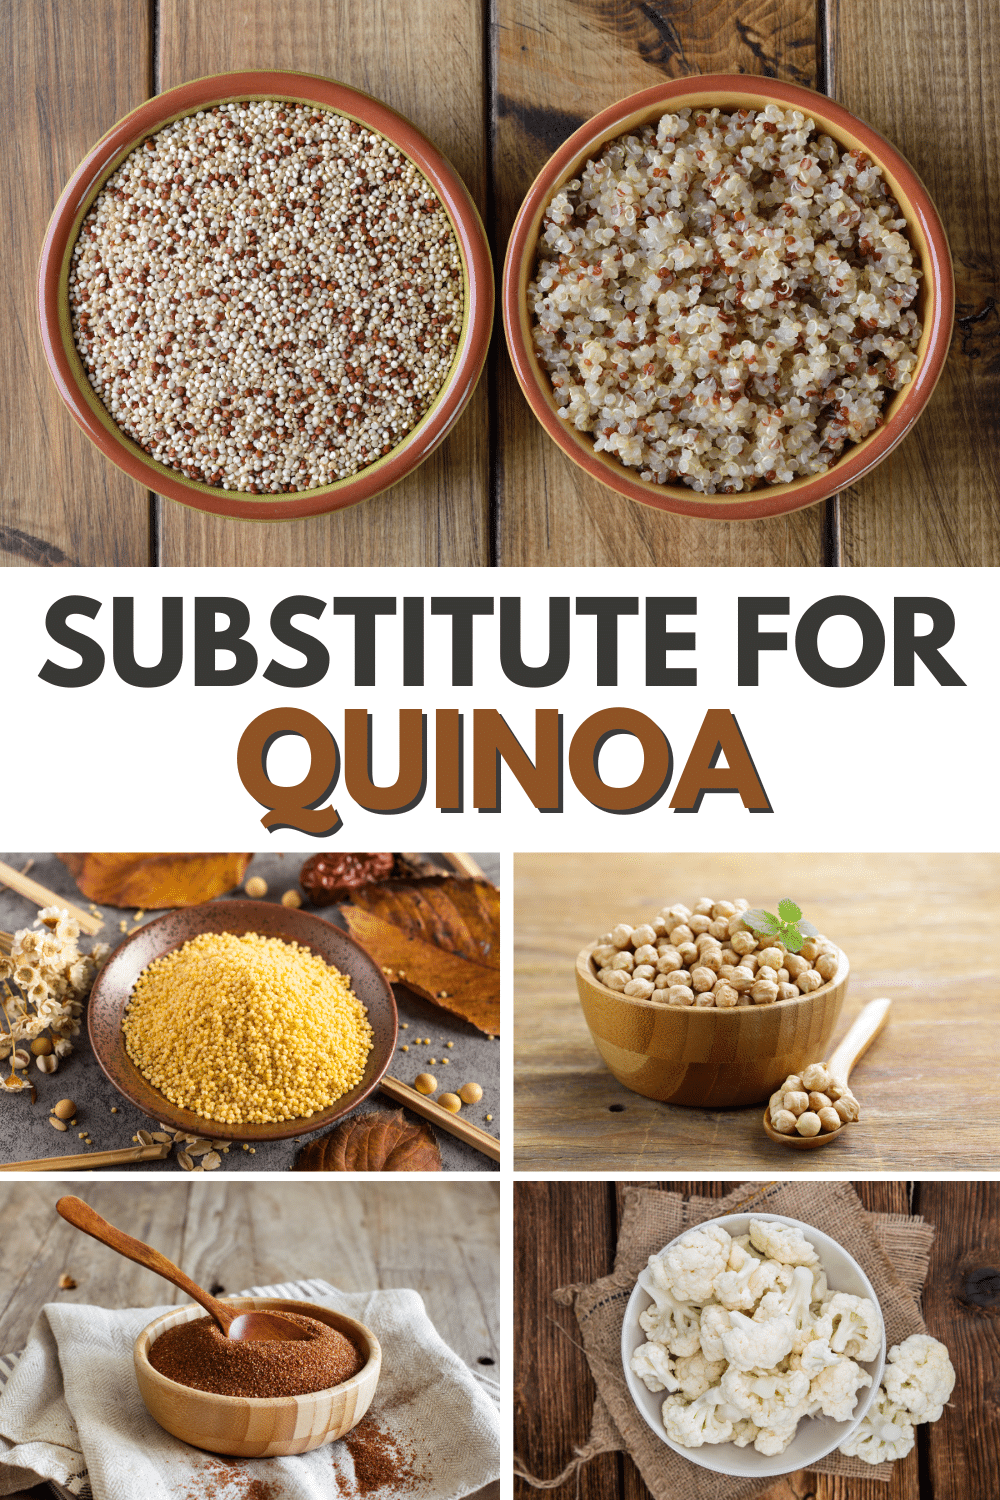 Quinoa substitutes for another grain option.